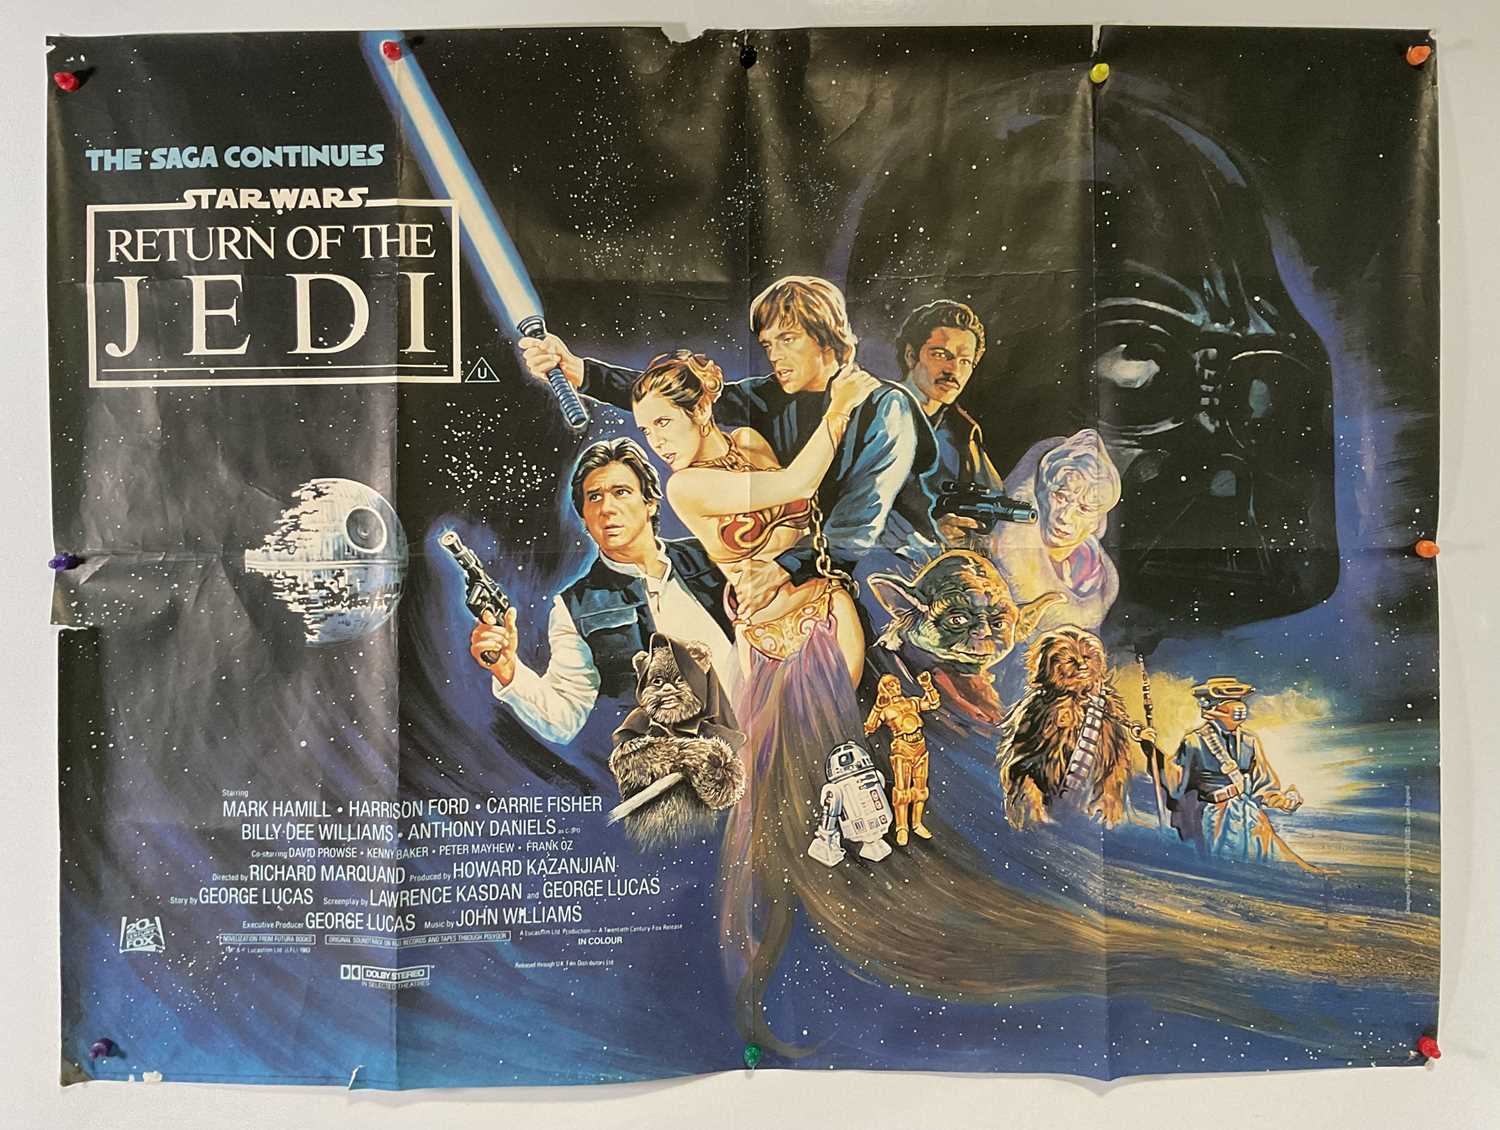 STAR WARS EPISODE VI: RETURN OF THE JEDI (1983) UK Quad film poster, Ewok style artwork by Josh